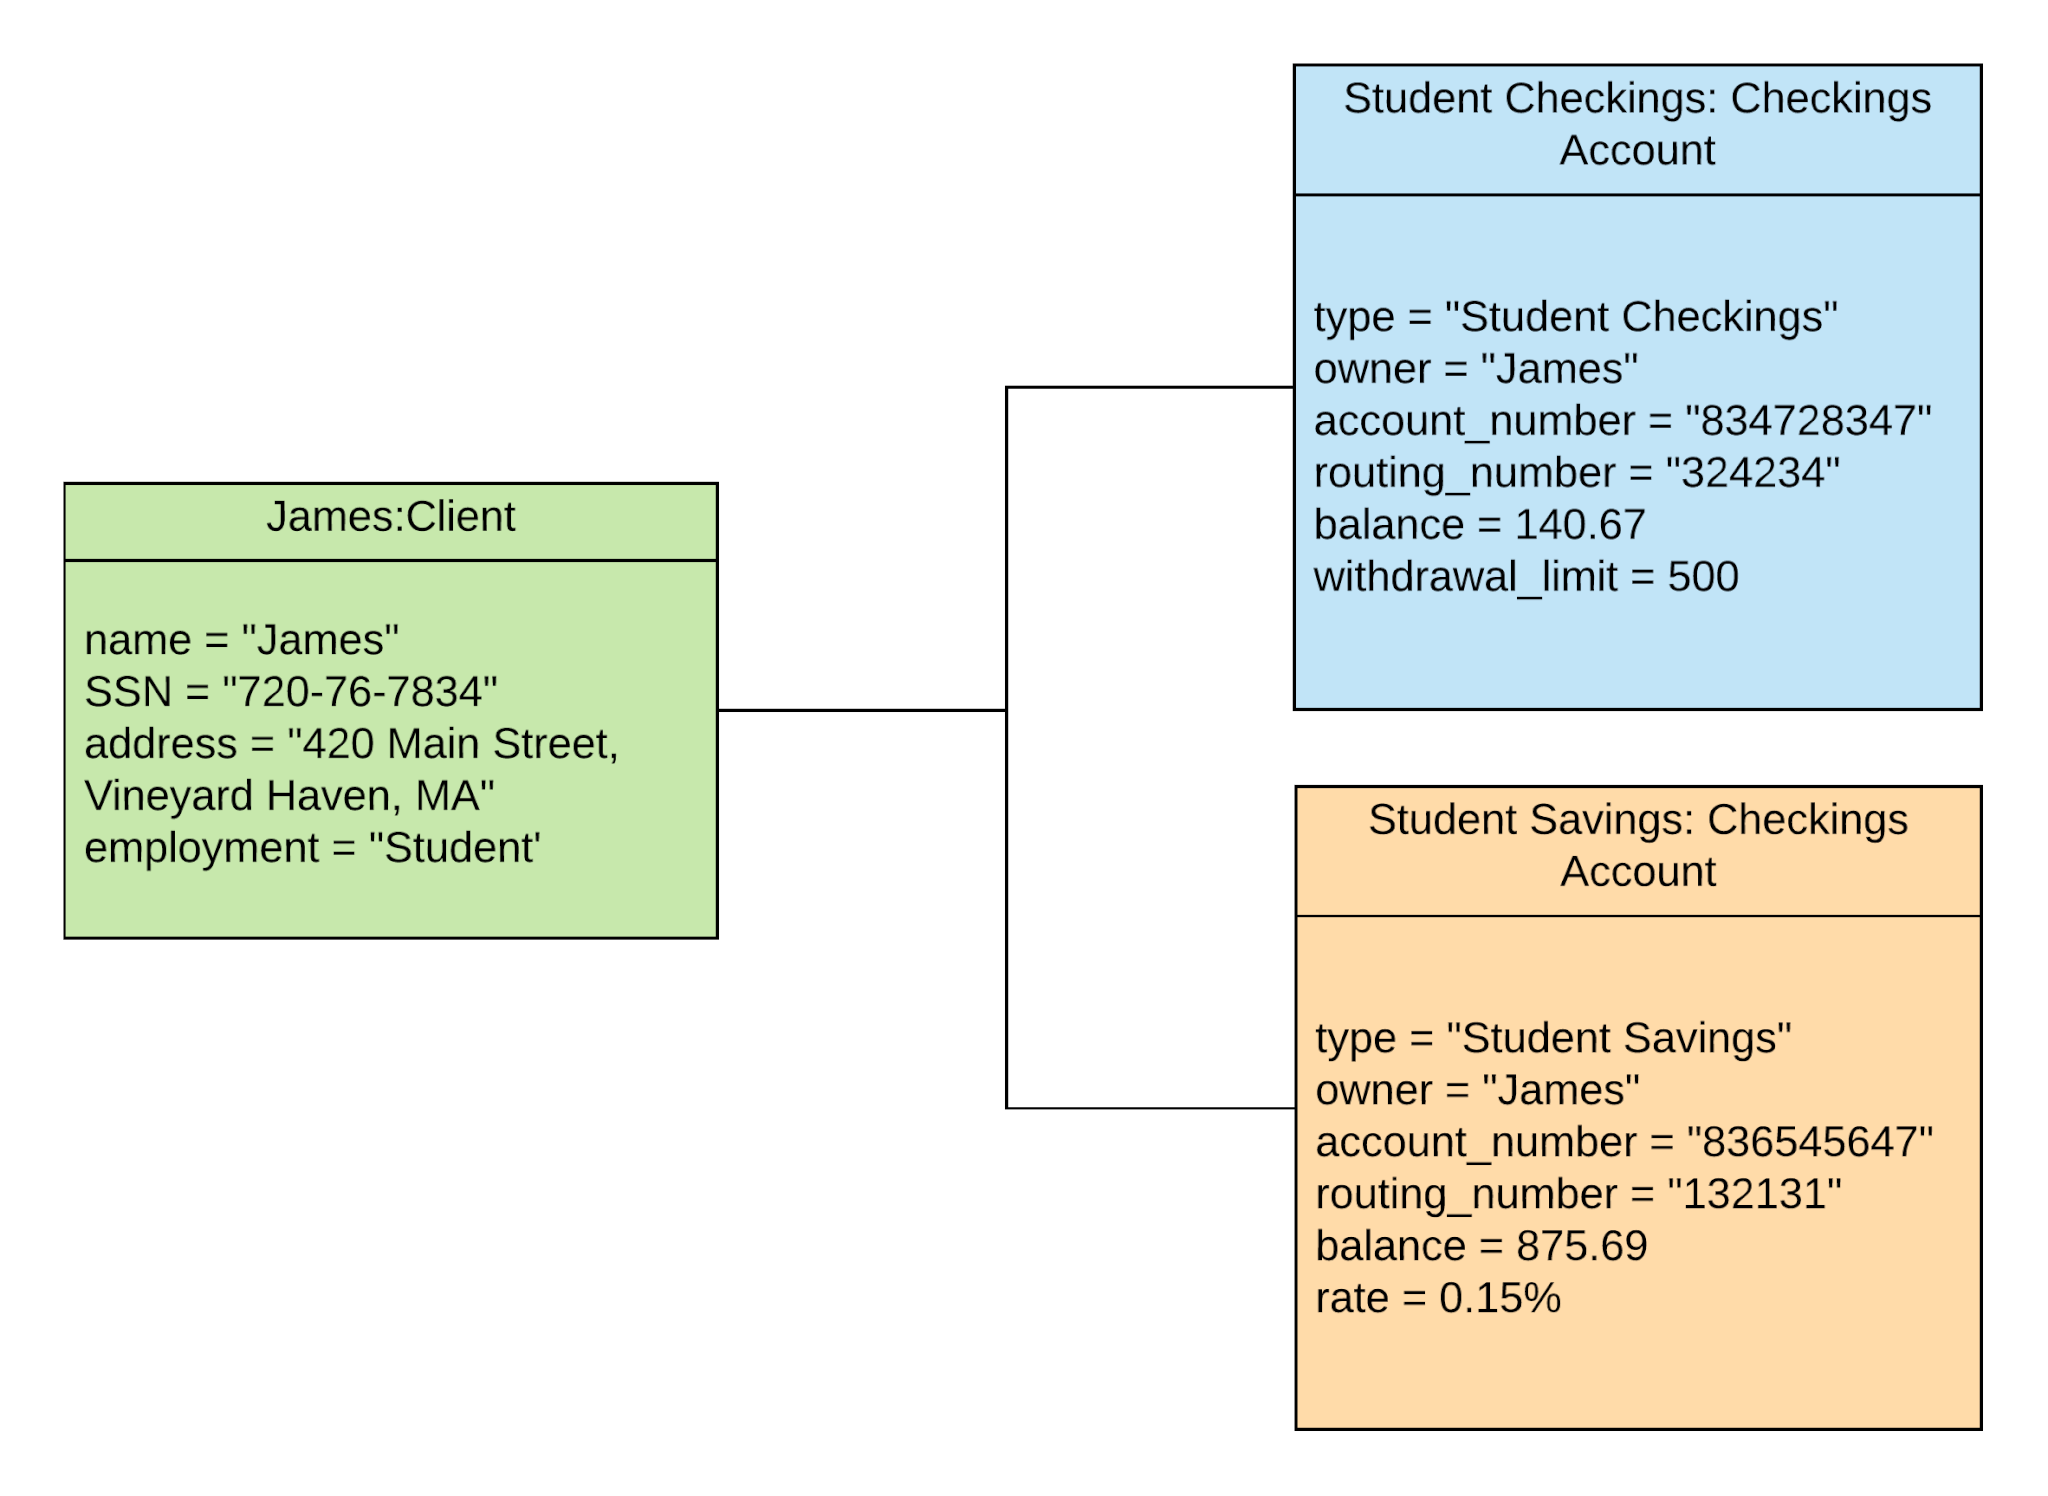 Object UML Diagram